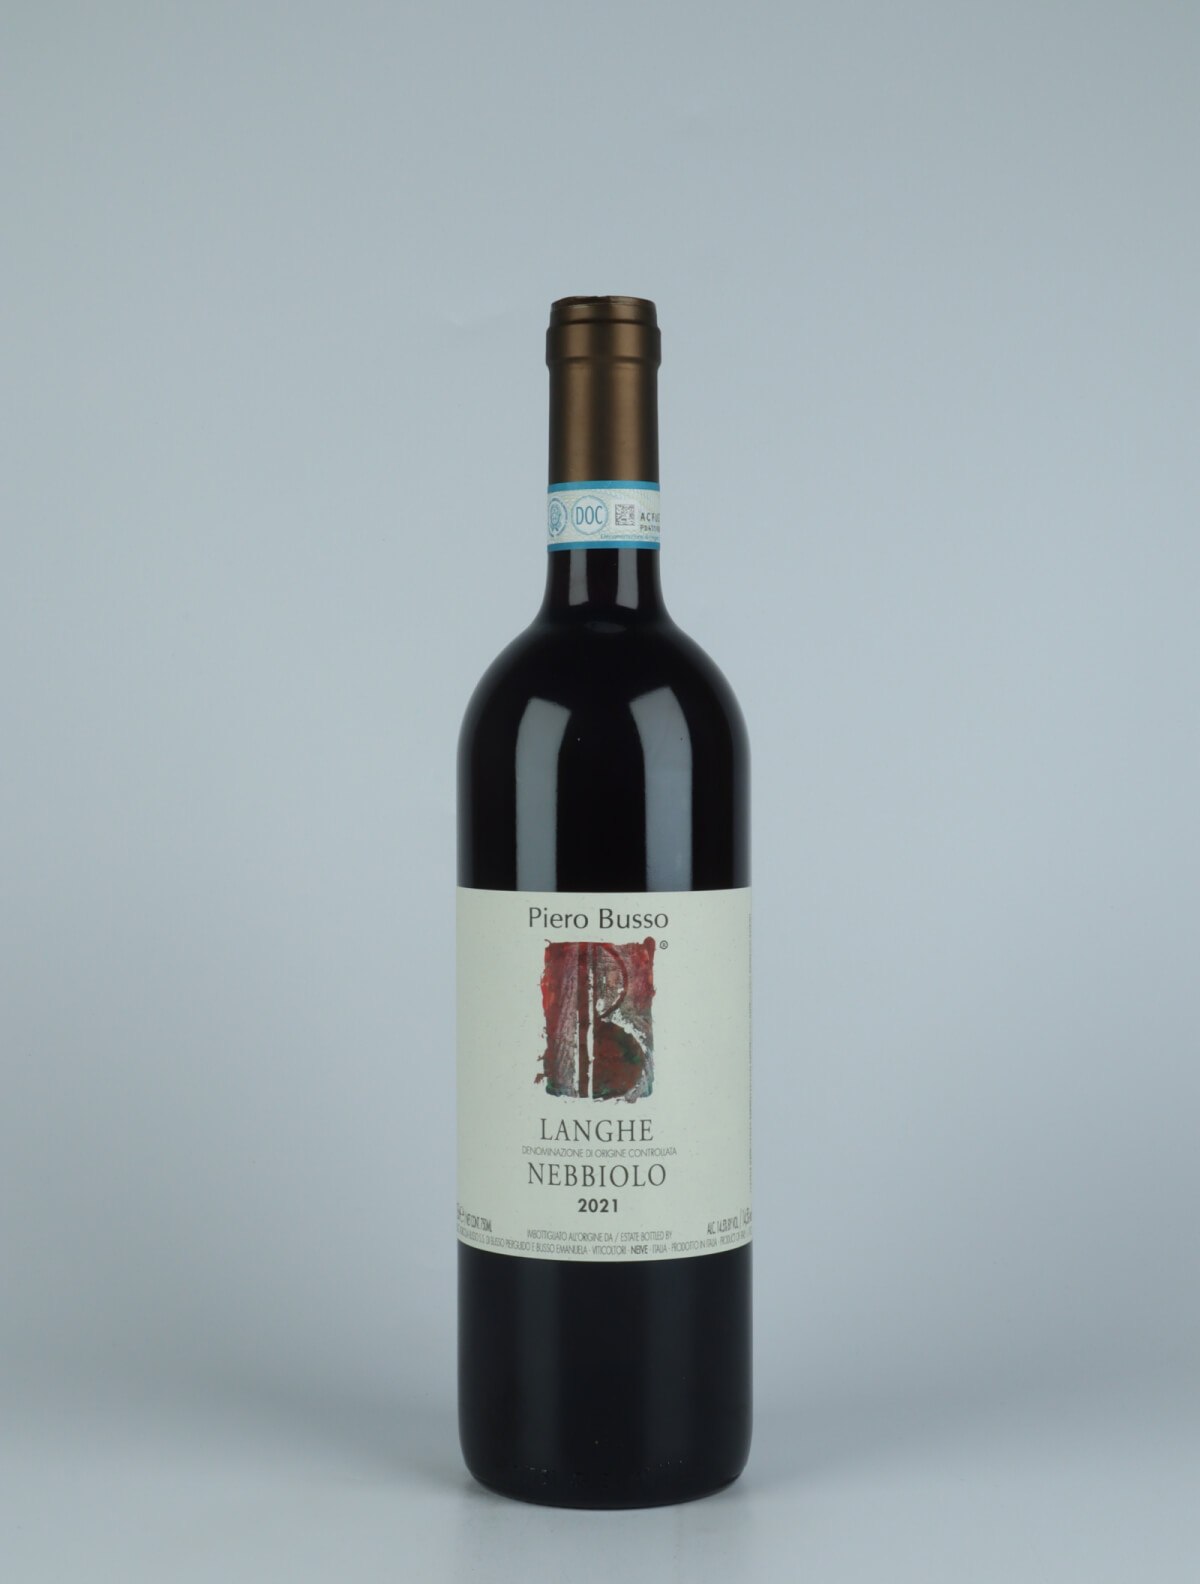 A bottle 2021 Langhe Nebbiolo Red wine from Piero Busso, Piedmont in Italy